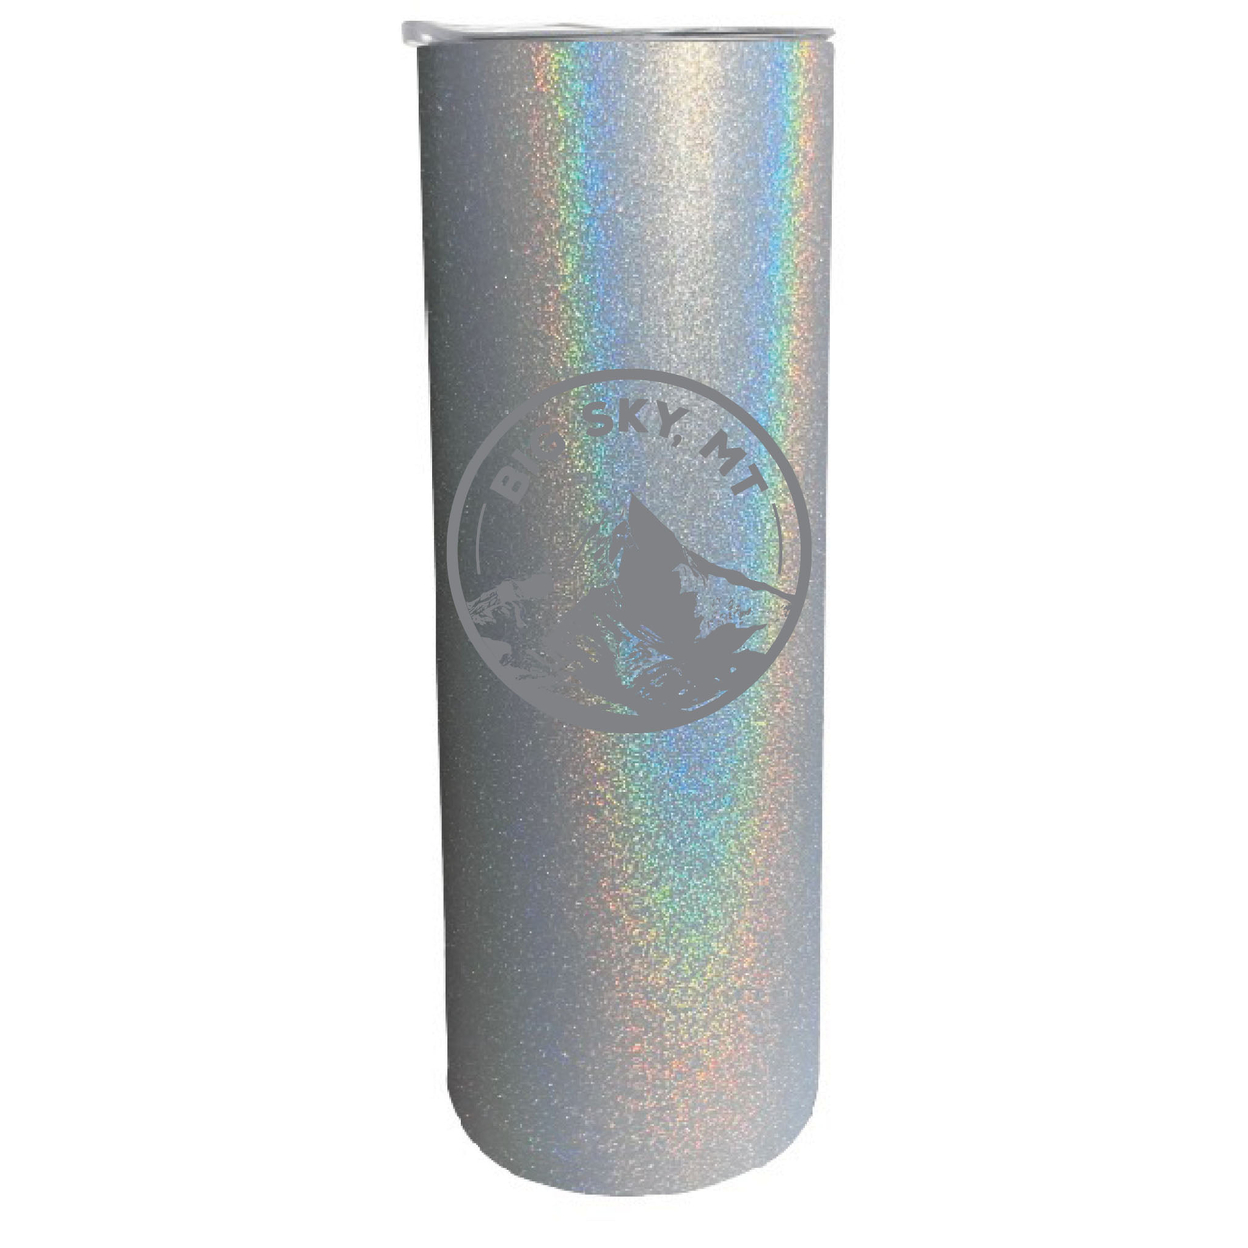 Big Sky Montana Souvenir 20 Oz Engraved Insulated Stainless Steel Skinny Tumbler - Gray Glitter,,4-Pack